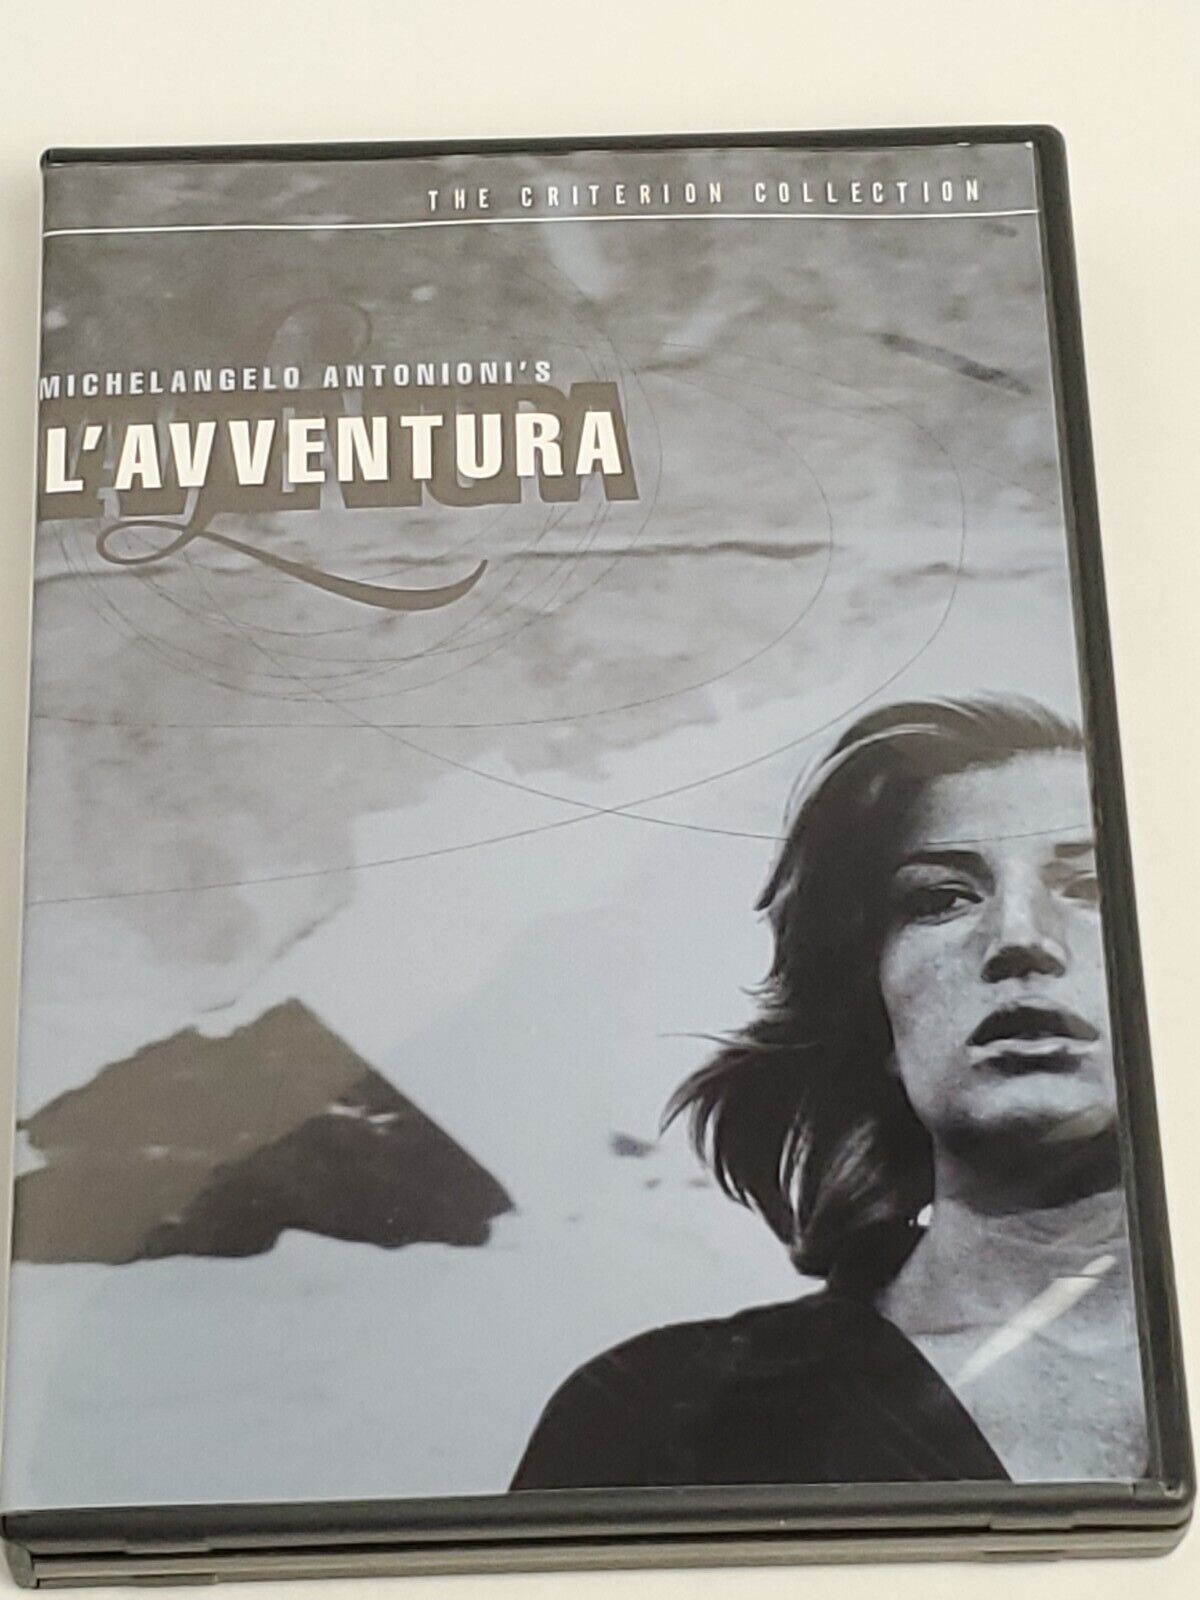 L'Avventura (The Criterion Collection) DVD (2 Disc Set) usa impo